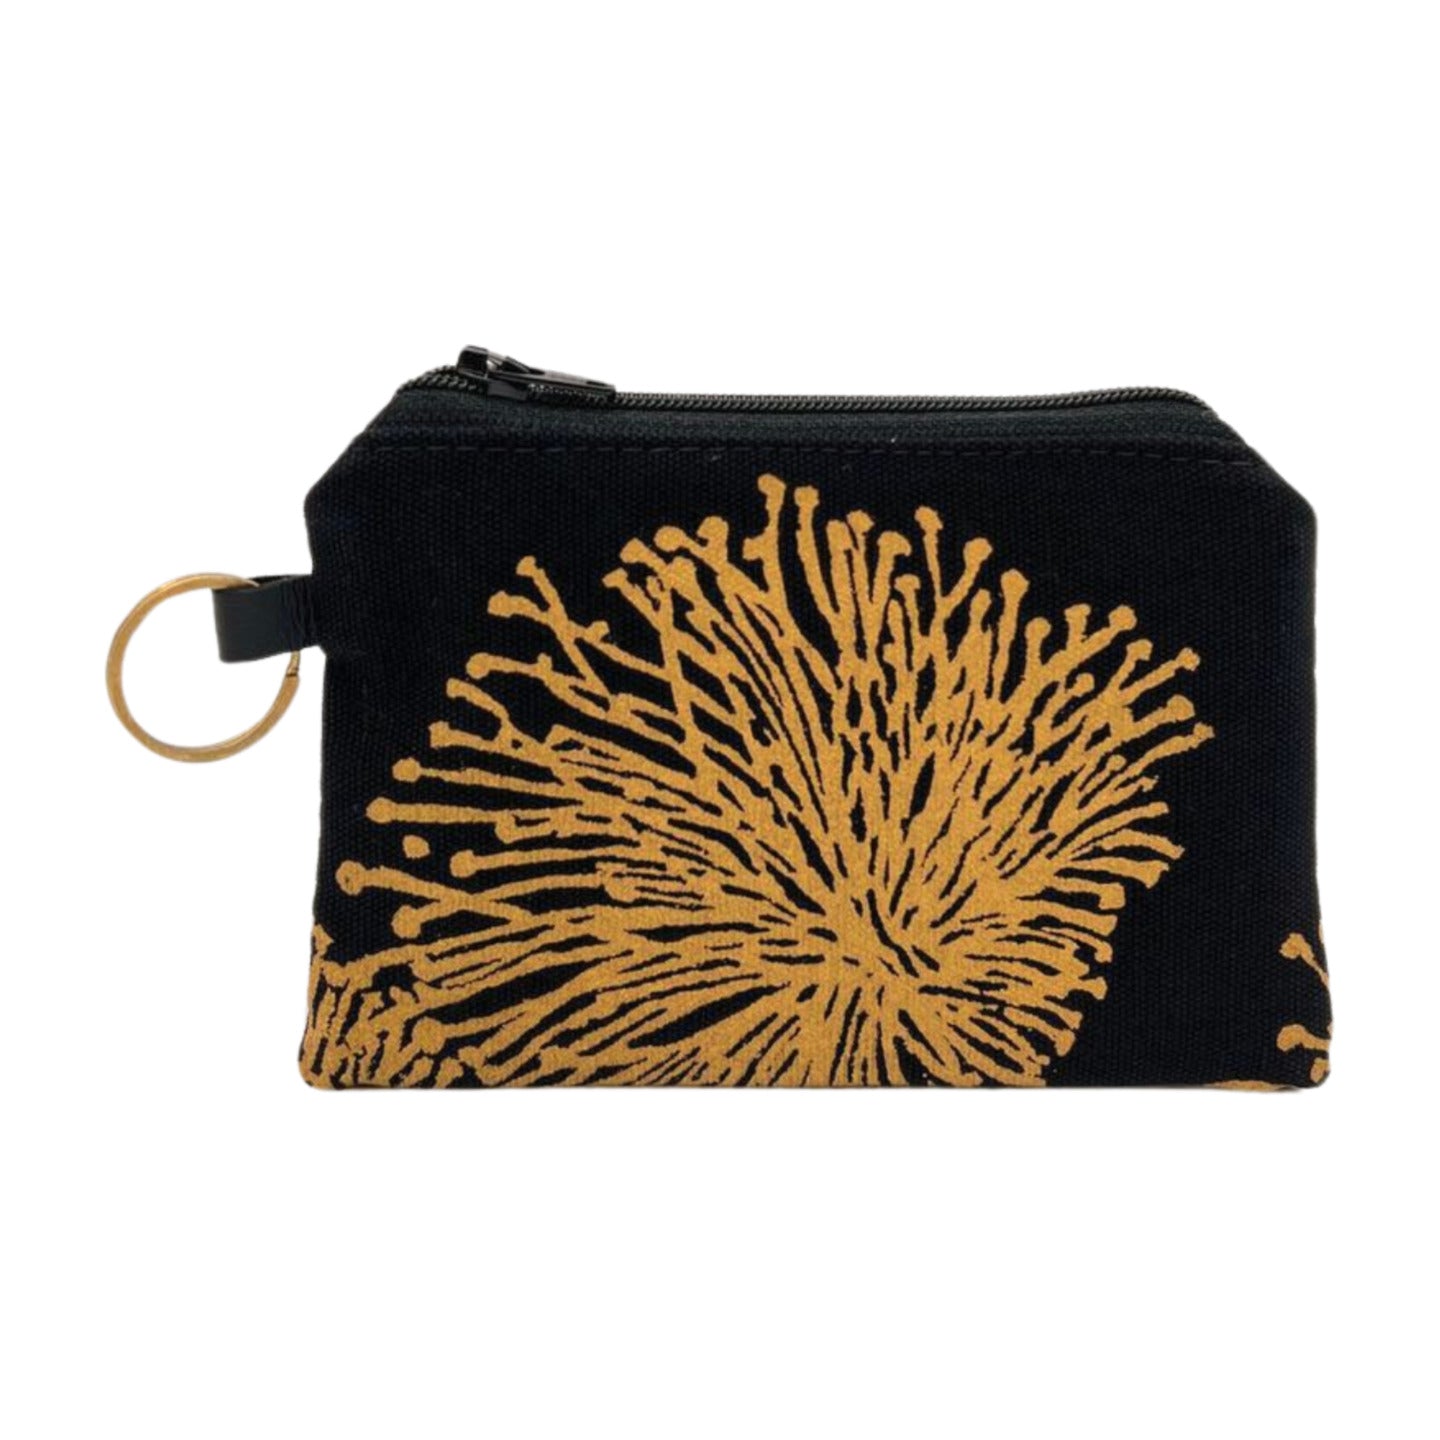 Pop-Up Mākeke - A Maui Day Original Handbags - Handprinted Mini Handbag - Gold ‘Ohi’a on Black Canvas - Front View